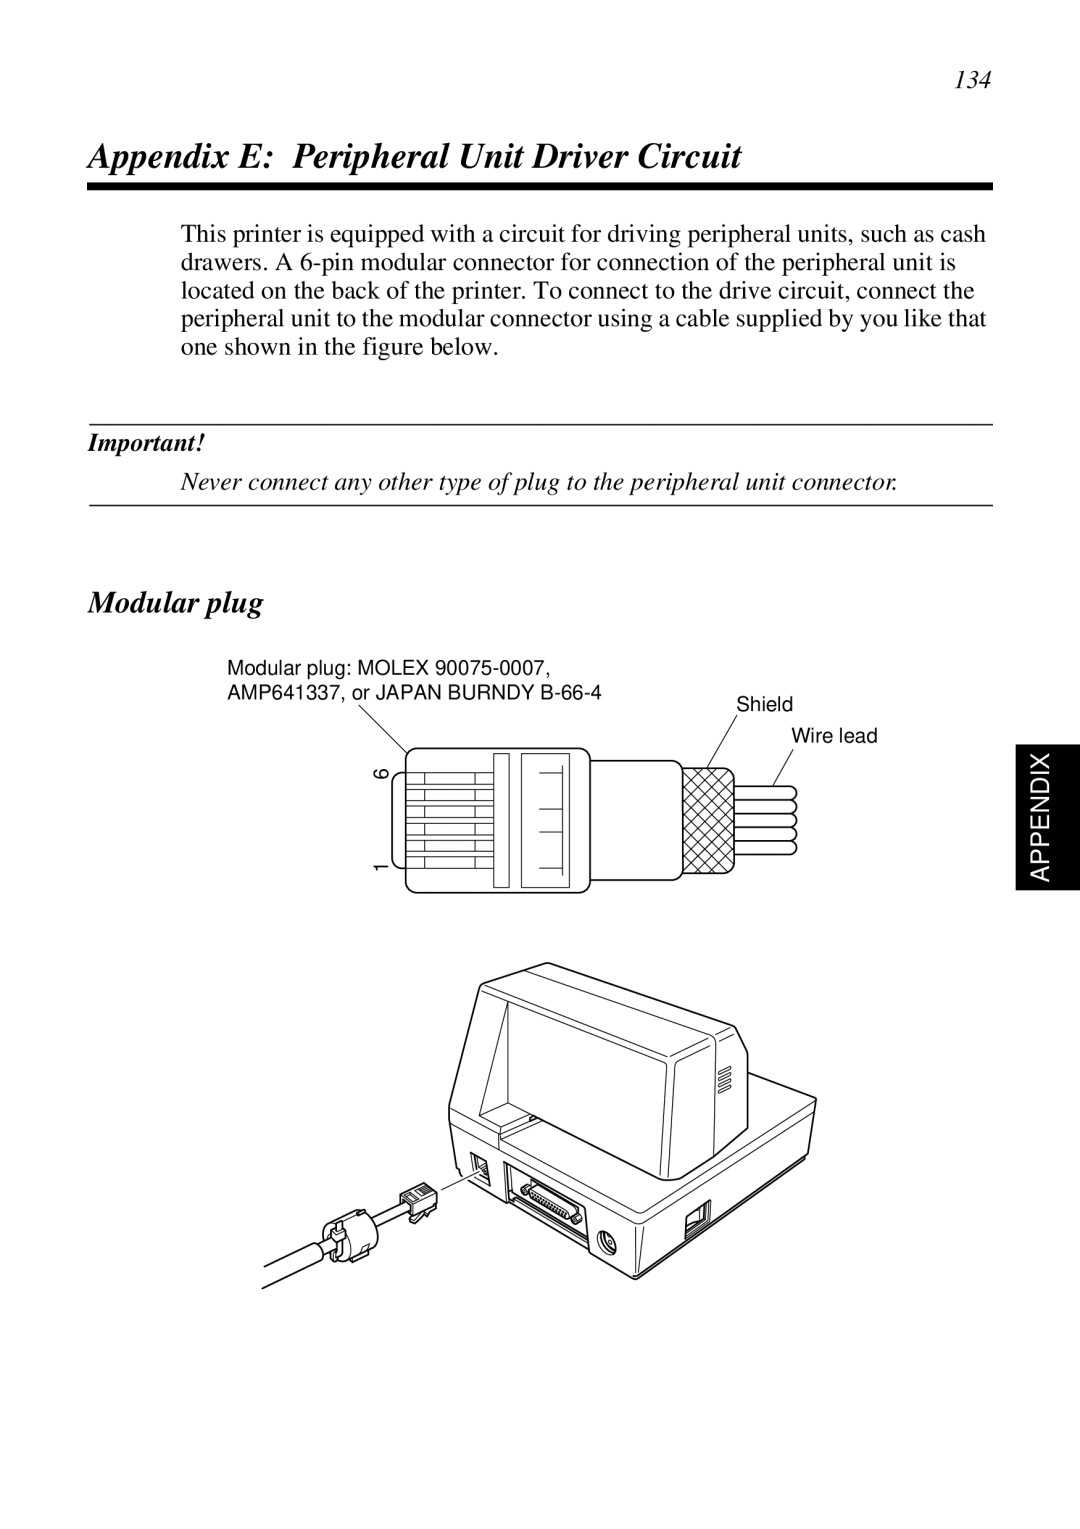 Star Micronics SP298 user manual Appendix E Peripheral Unit Driver Circuit, Modular plug 